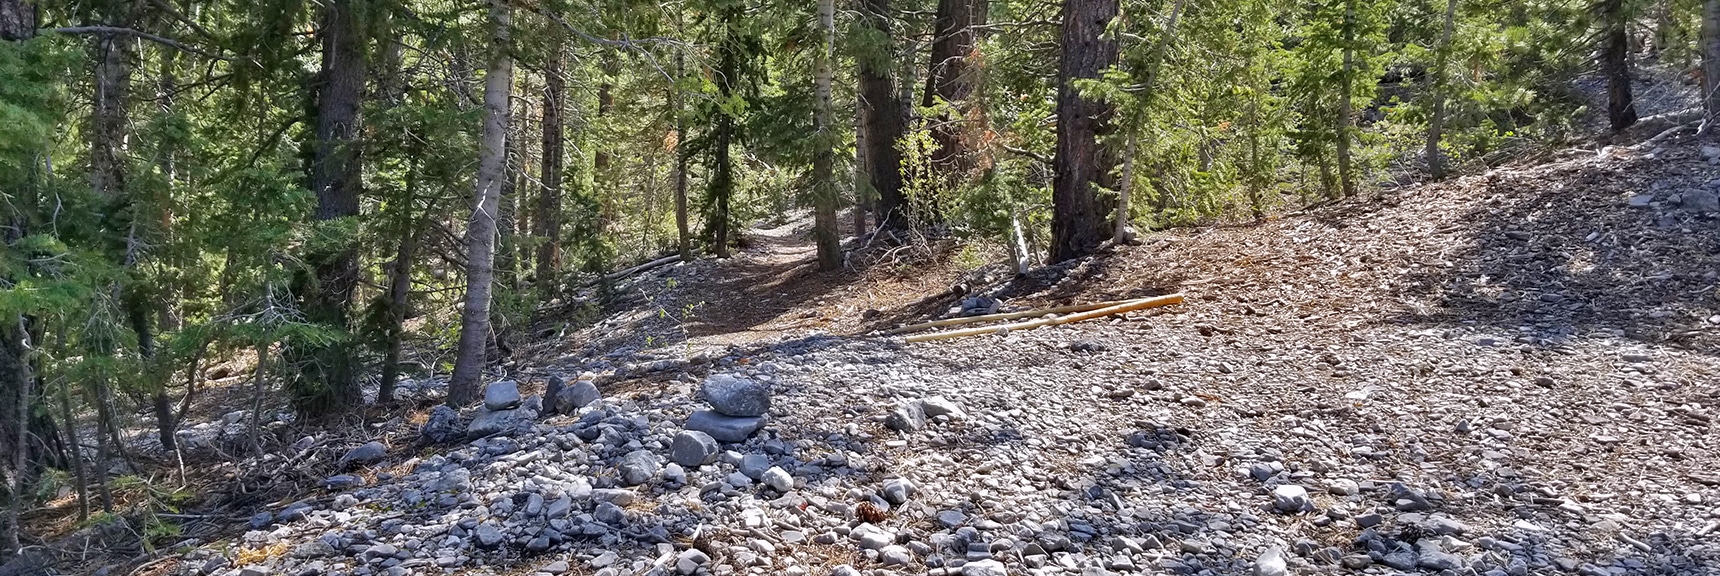 Point Where Cougar Ridge Trail Branches Off from the Unpaved Roads Above Deer Creek Road | Deer Creek Rd - Mummy Cliffs - Mummy Springs - Raintree - Fletcher Peak - Cougar Ridge Trail Circuit | Mt Charleston Wilderness | Spring Mountains, Nevada